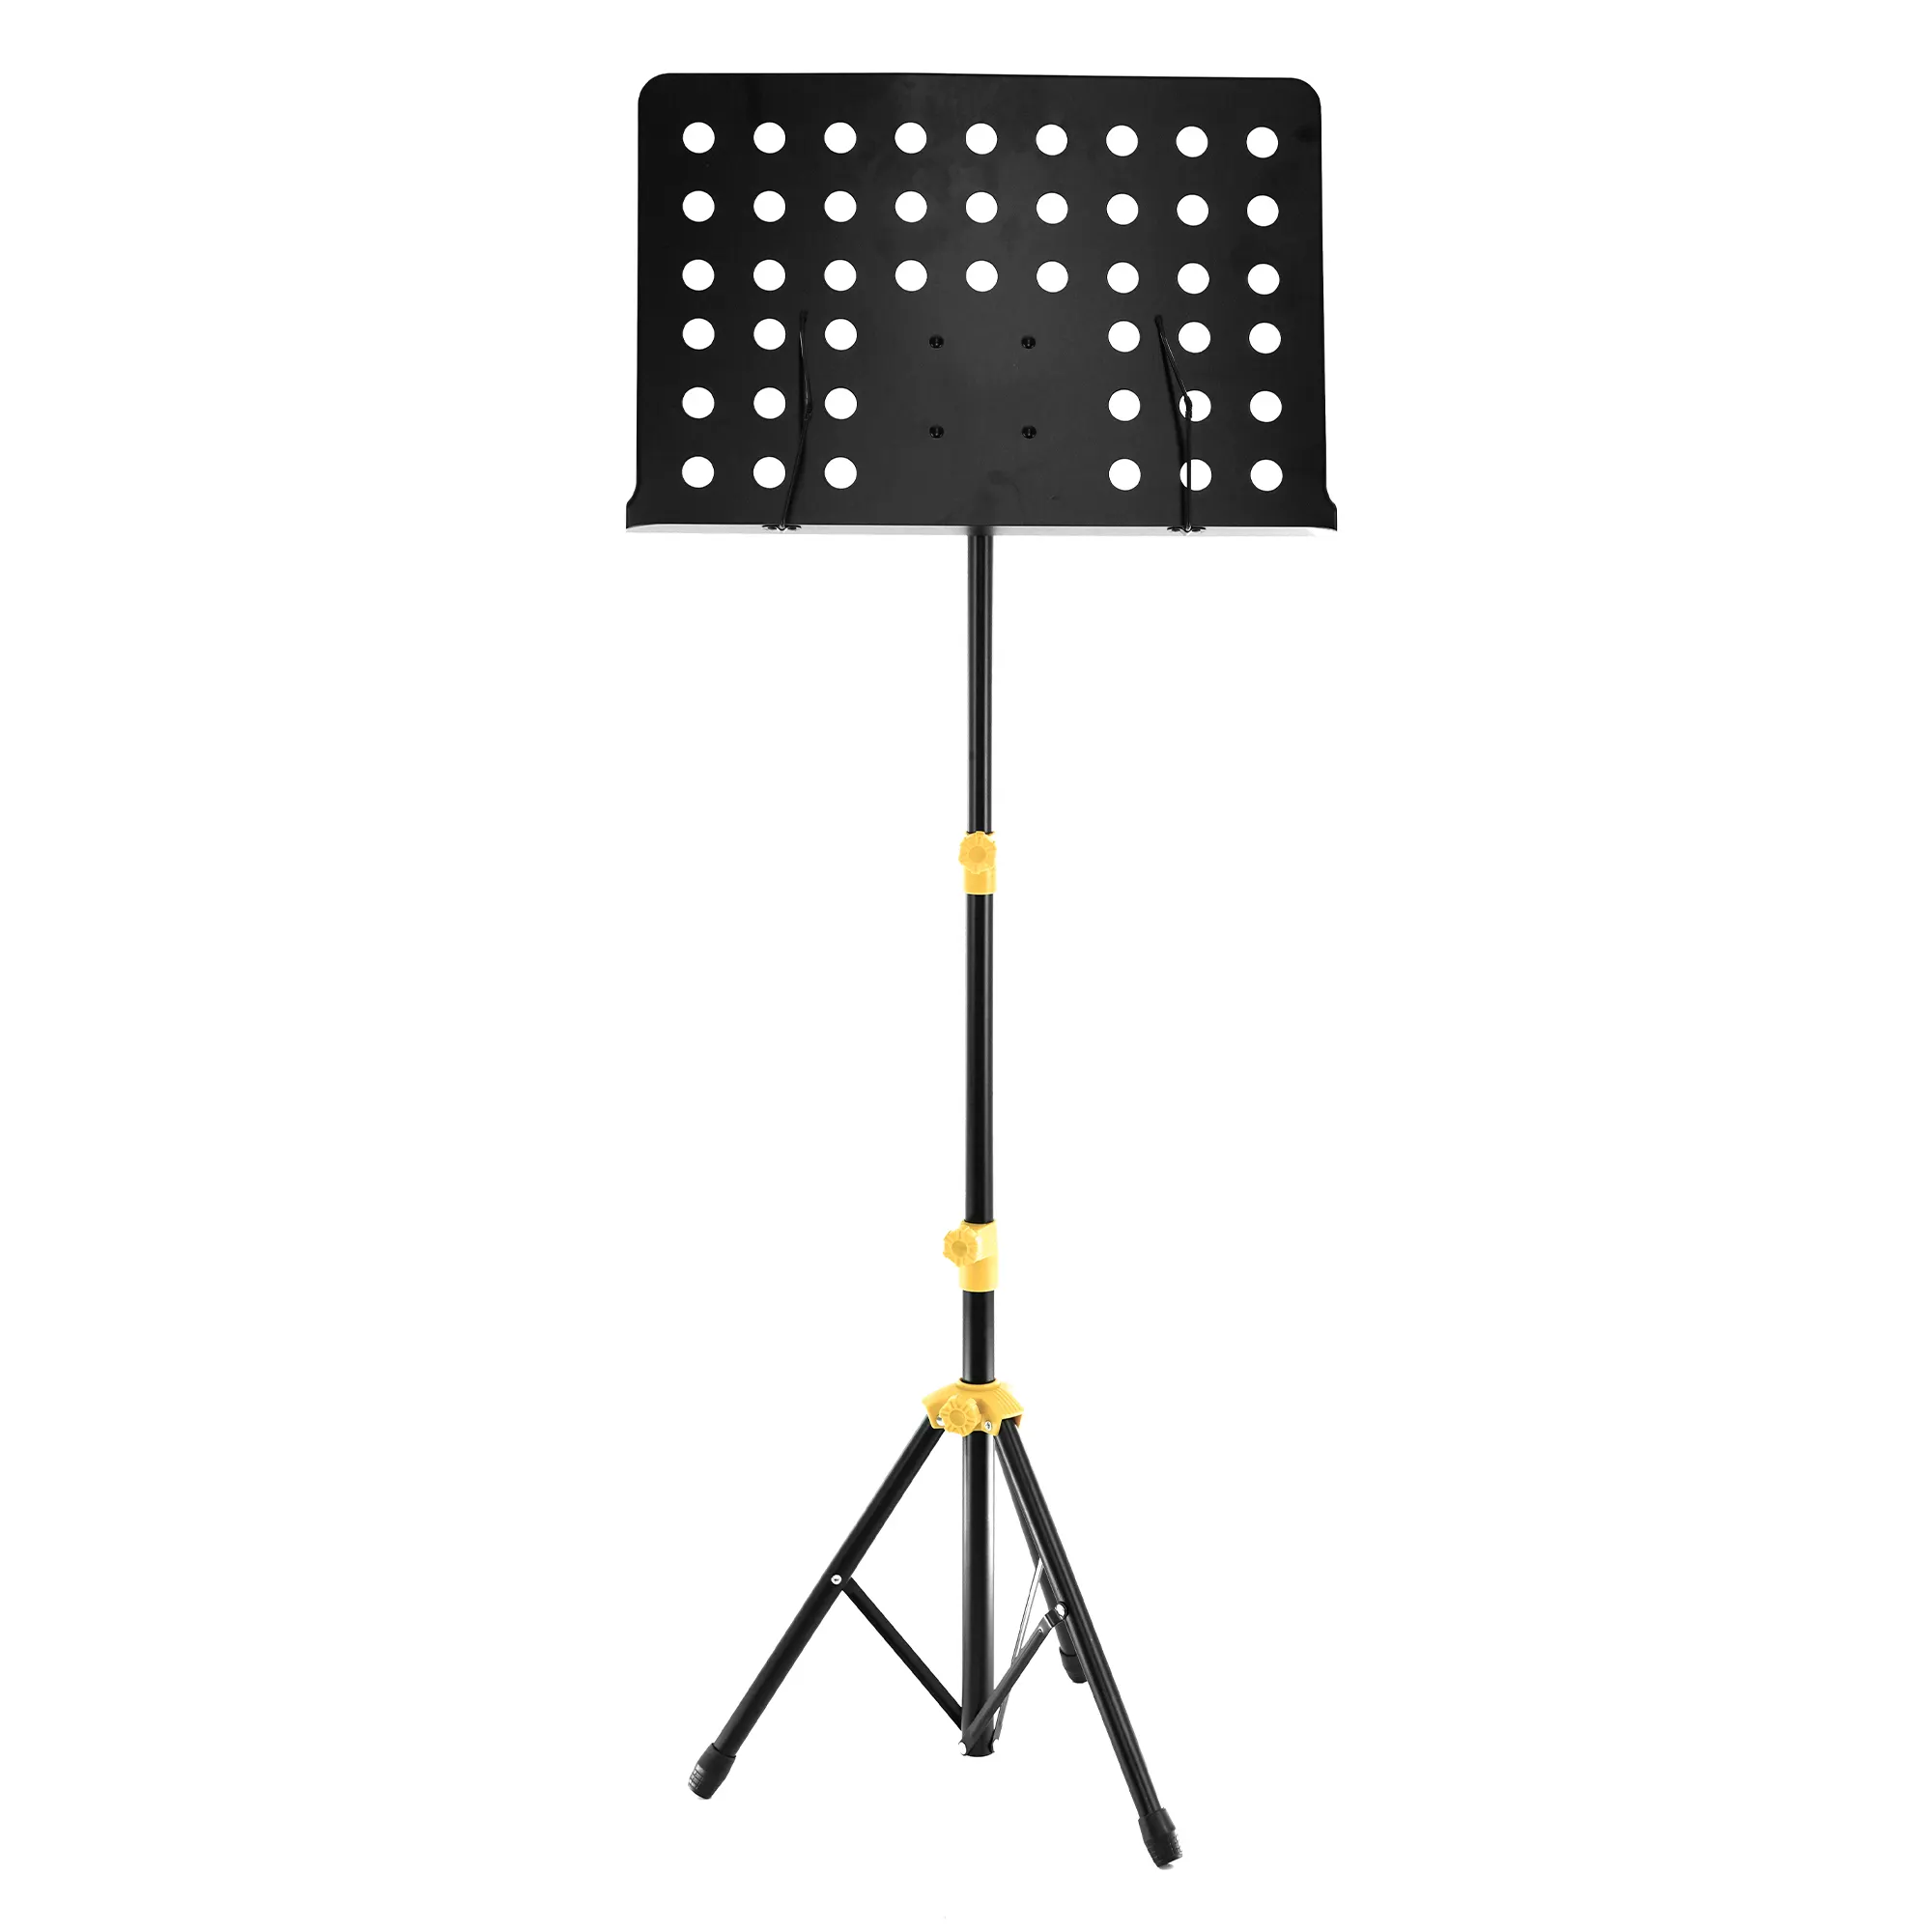 MS-34Y treppiede strumento musicale supporto musicale portatile economico supporto musicale giallo in vendita